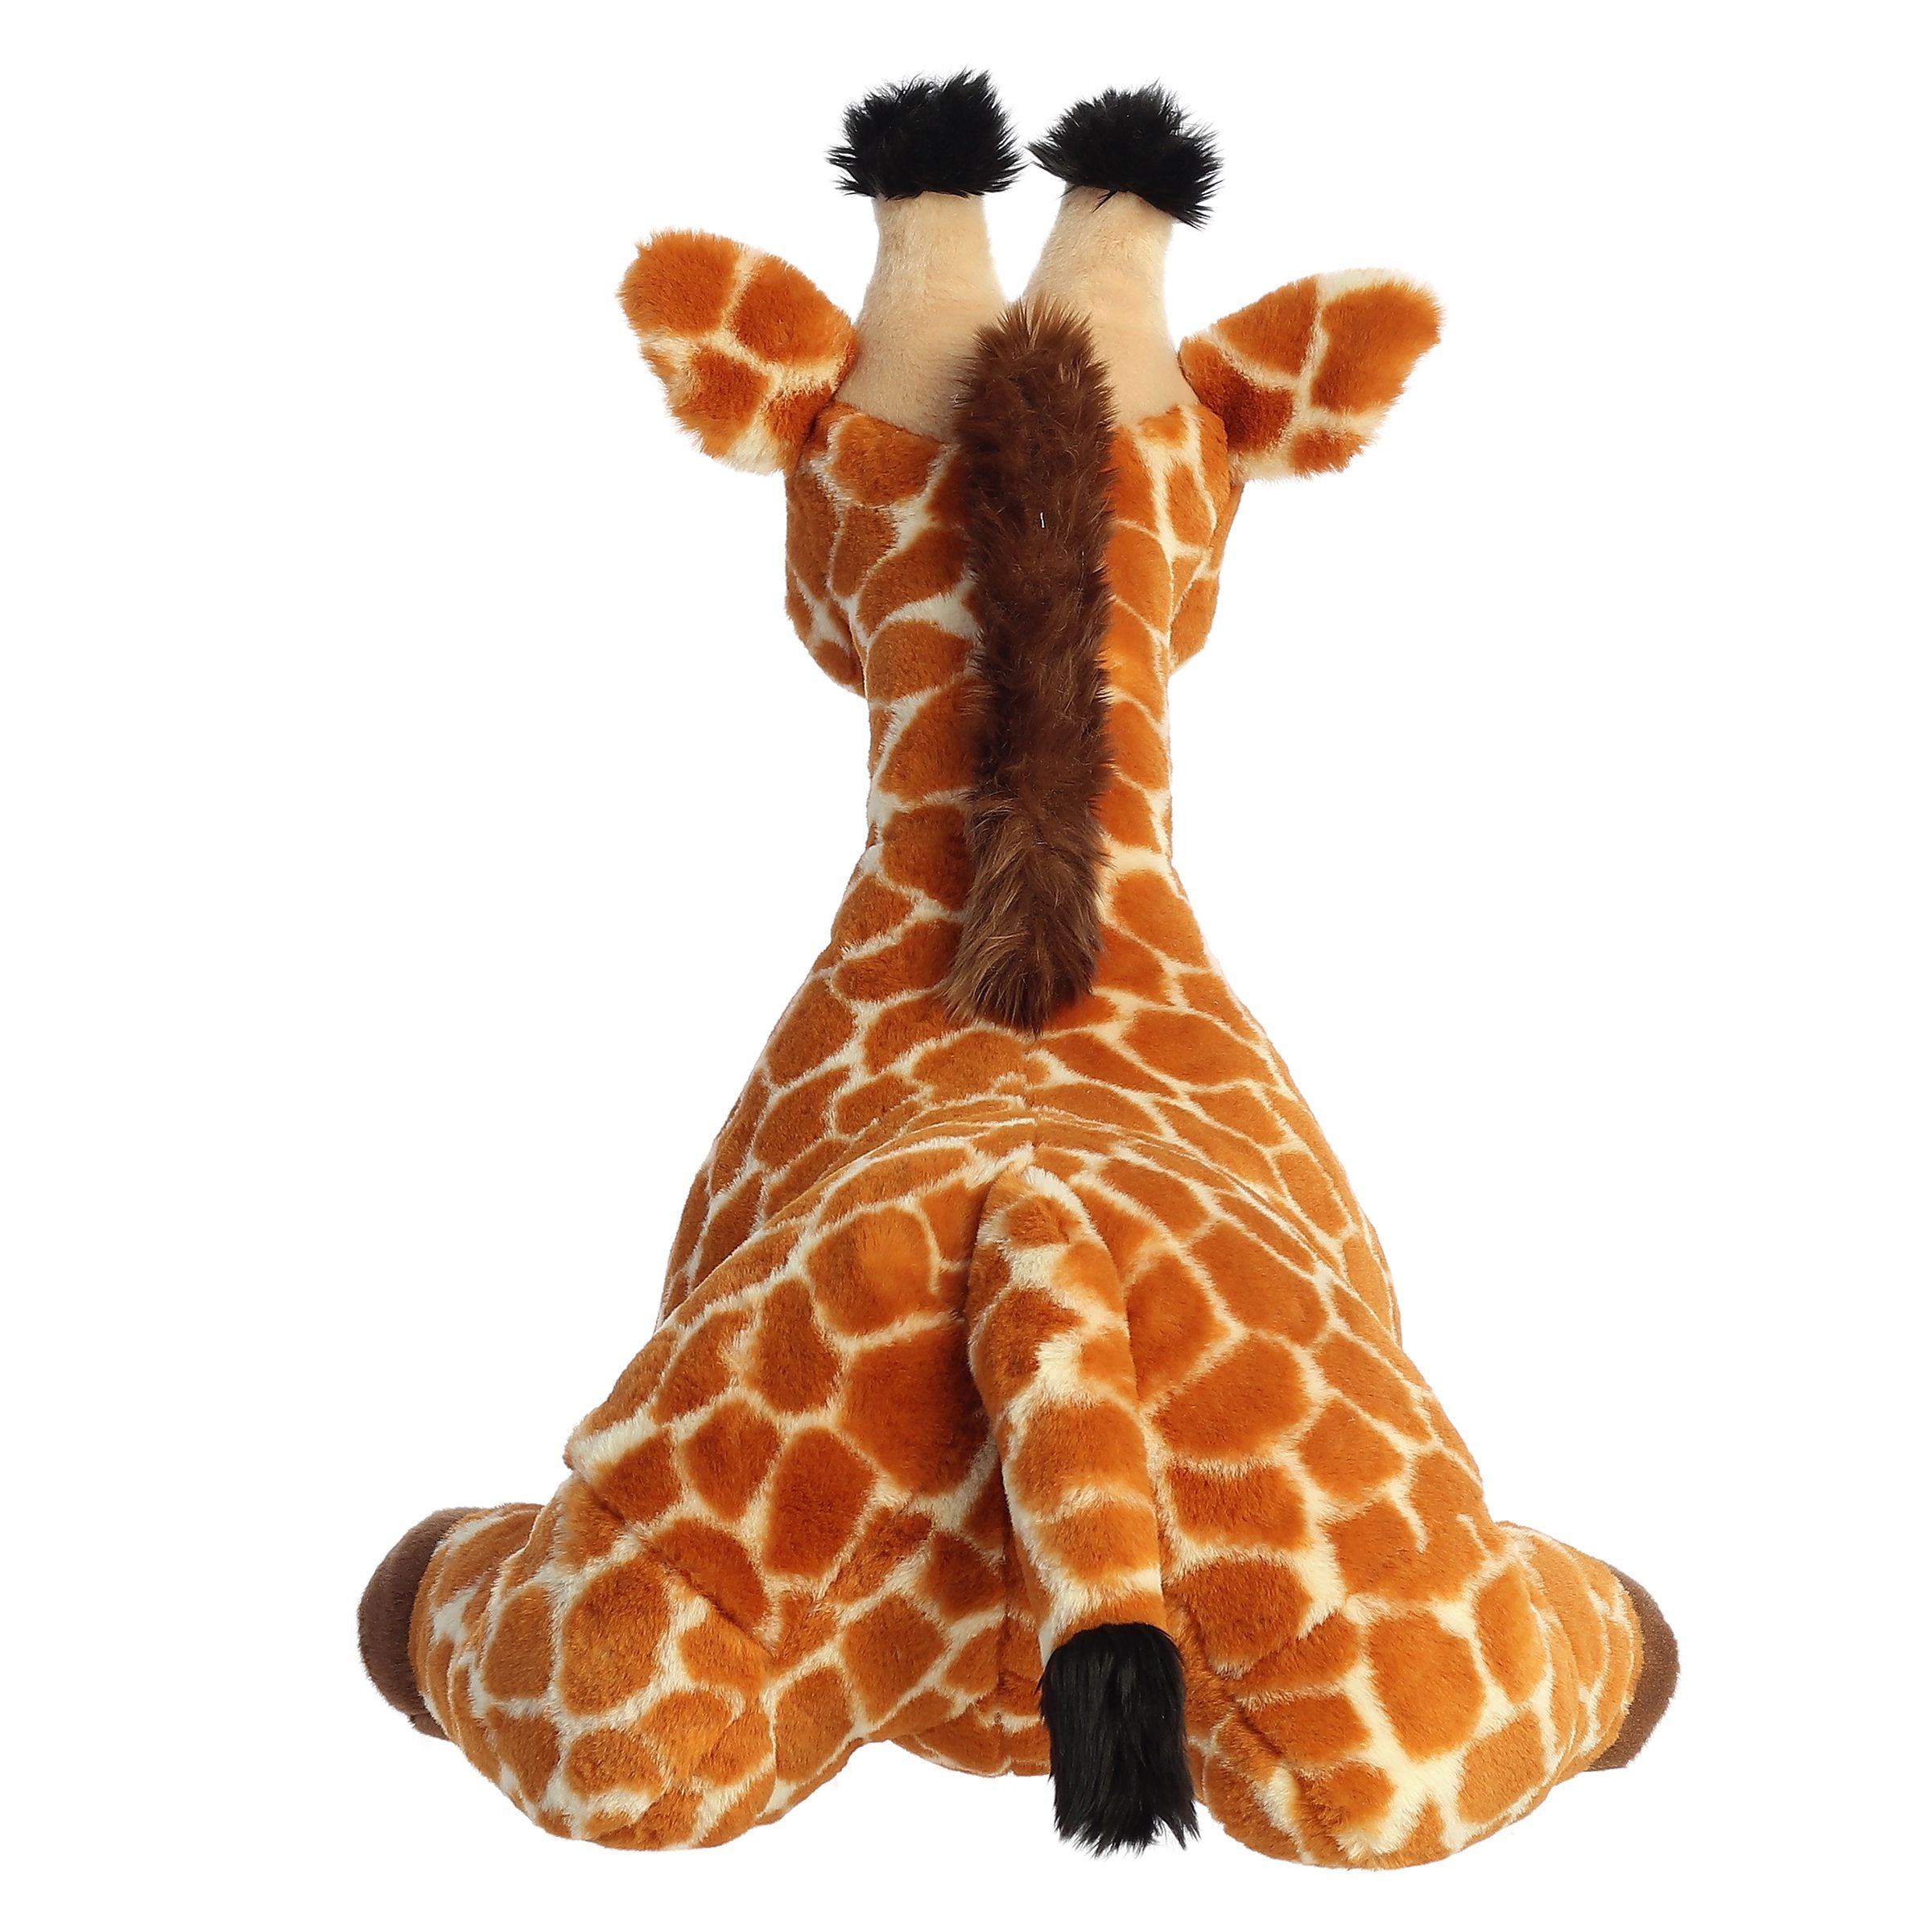 Giraffe Extra Large Stuffed Animal, Giant Giraffe Plush